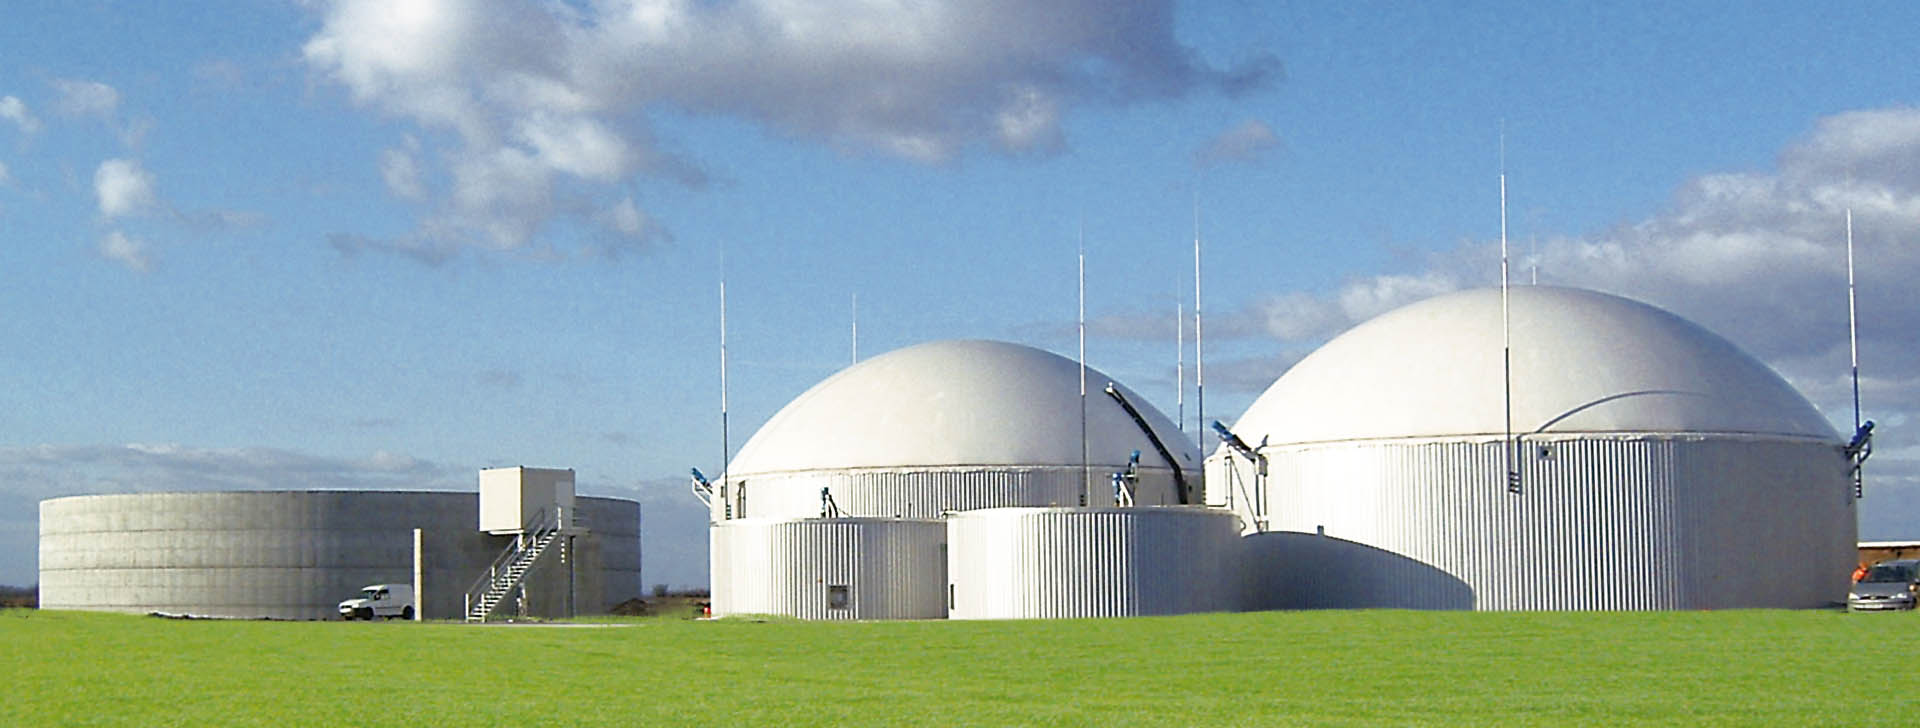 Biogasanlage mit Endlager